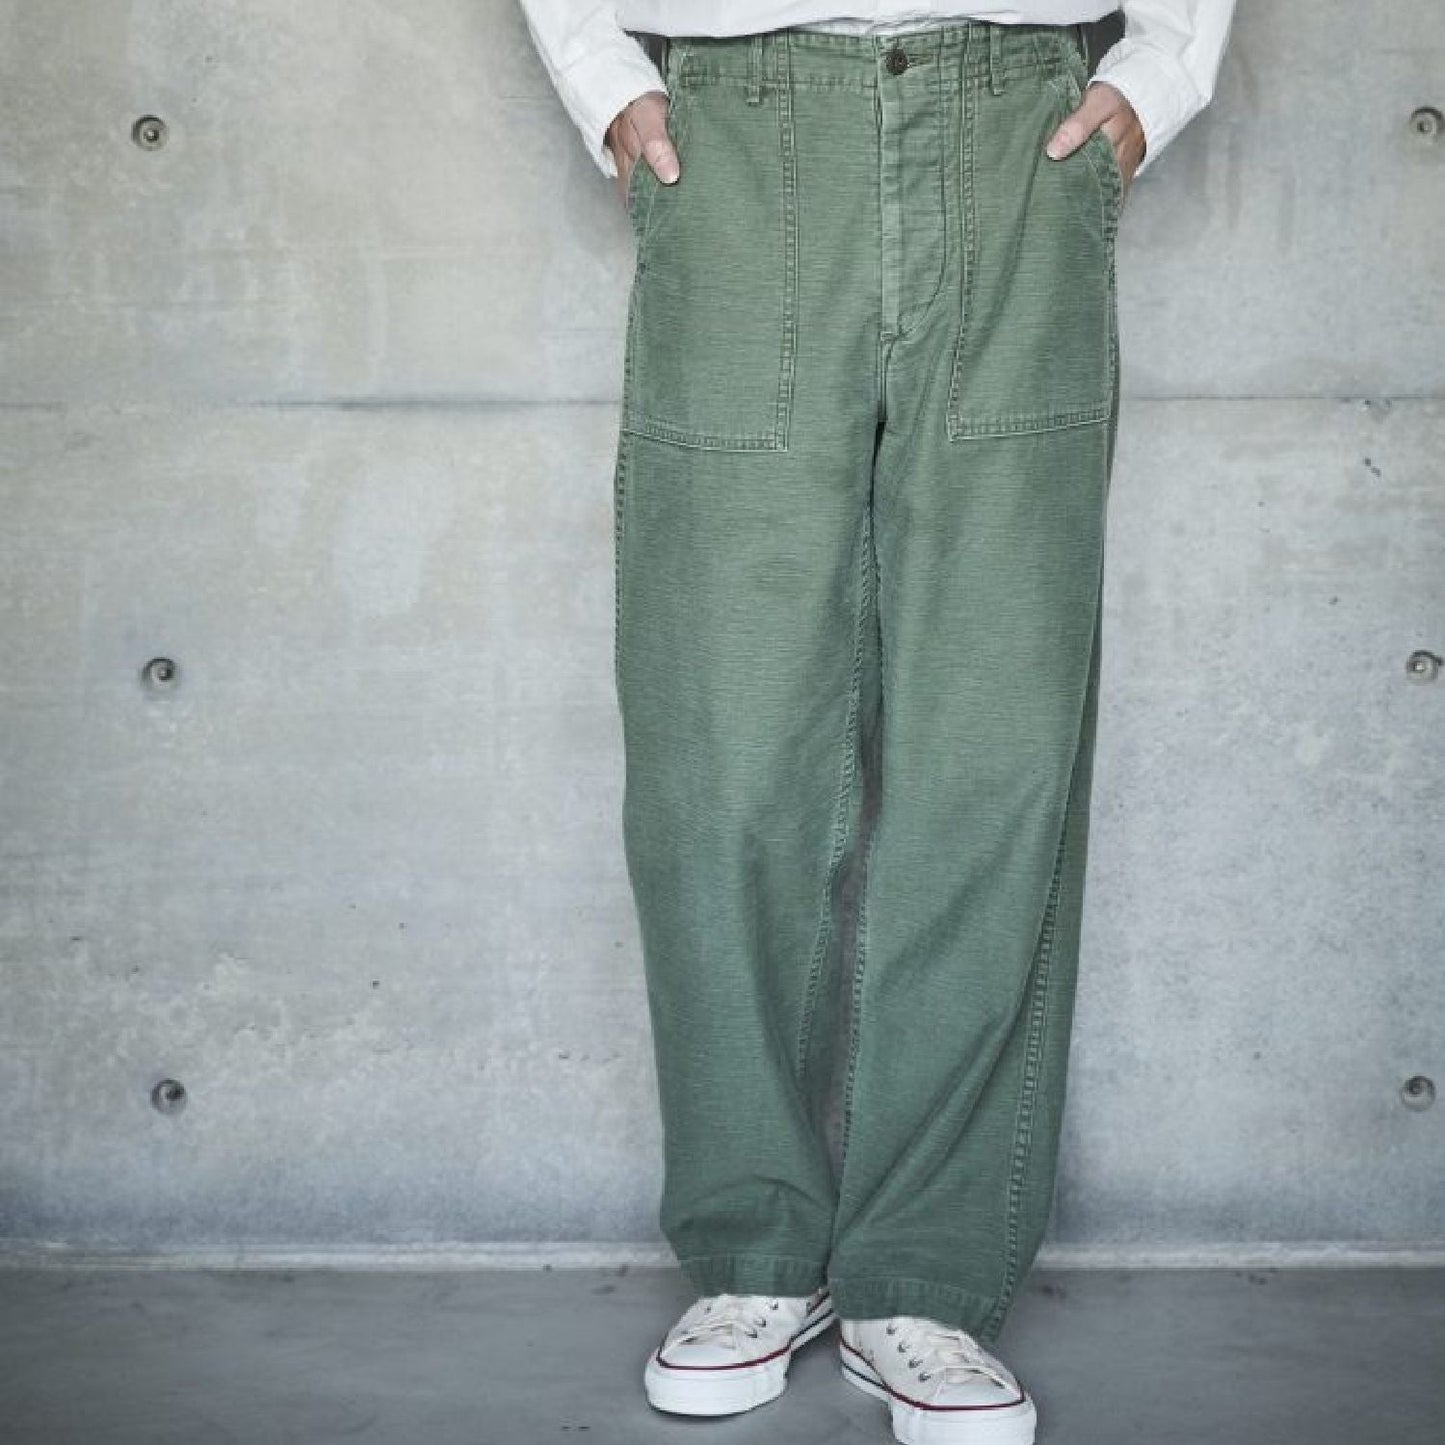 OrSlow US Army Fatigue Pants (Regular Fit) - Vintage Wash